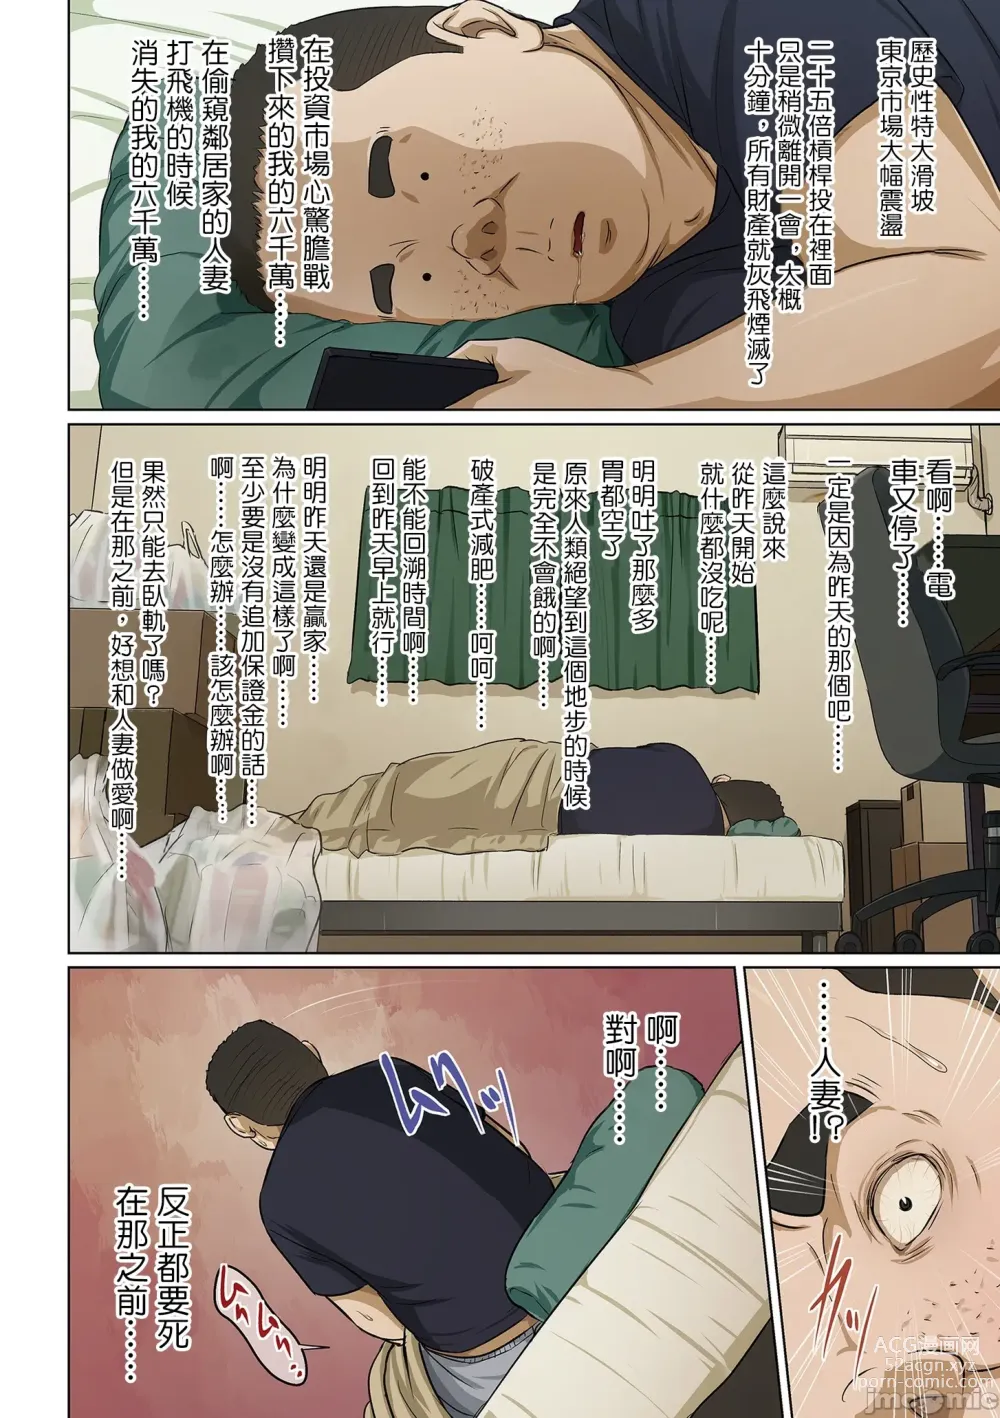 Page 9 of manga Karamitsuku Shisen 3